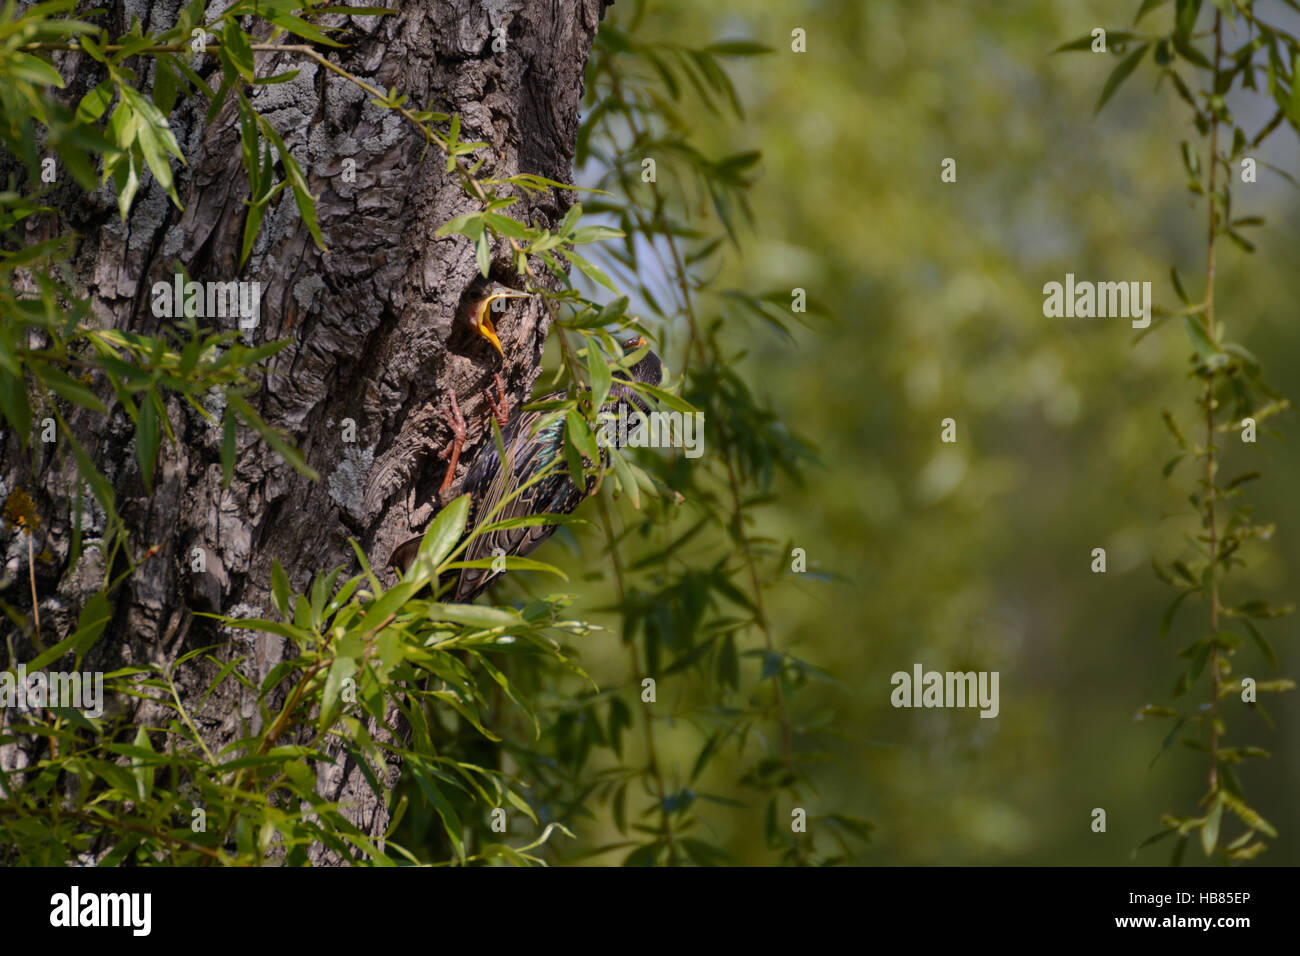 Bird Star feeding young in nest tree Stock Photo